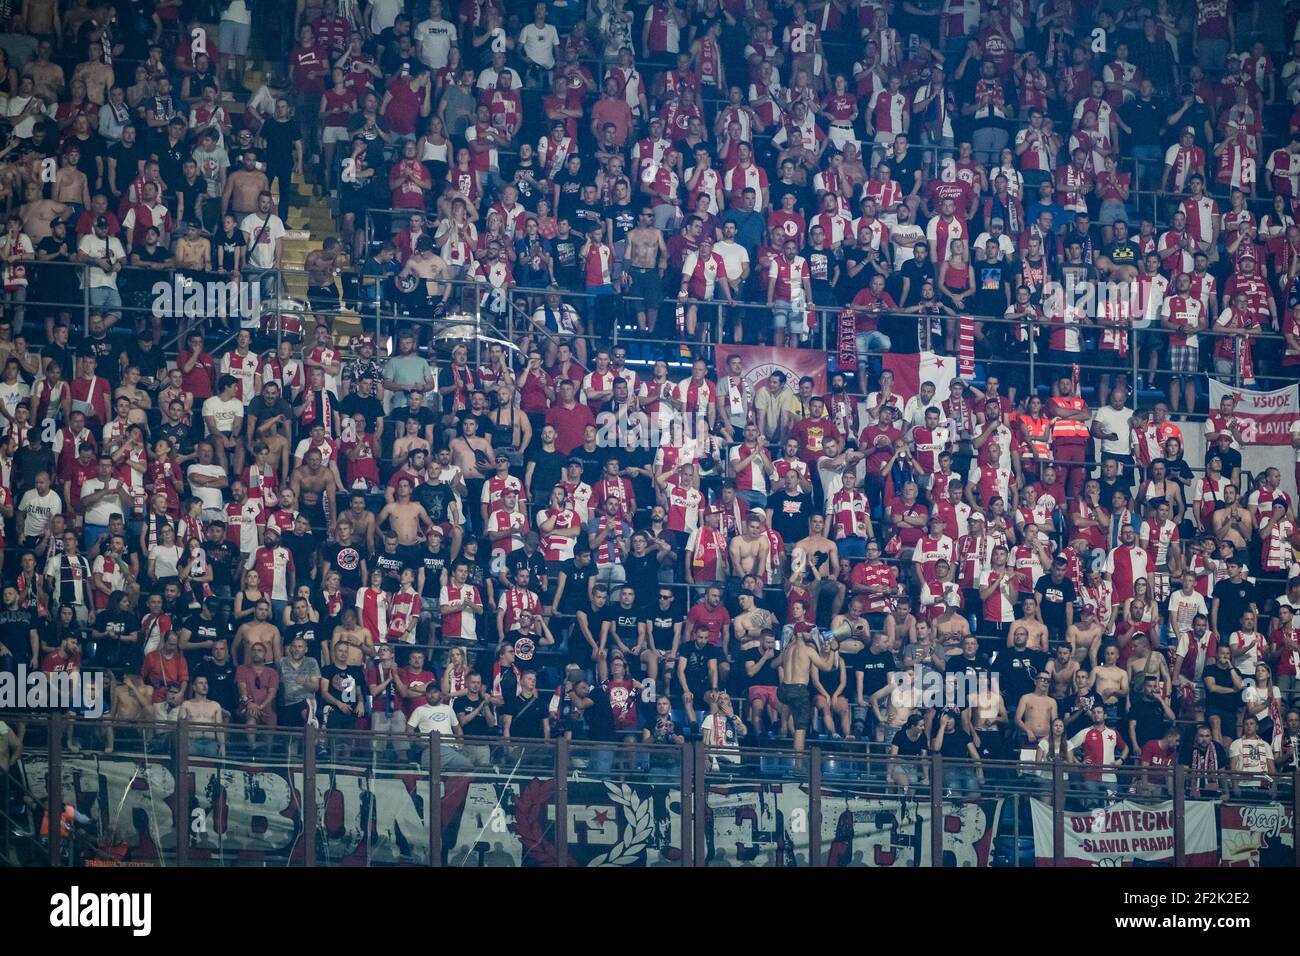 SK Slavia Praha, fans Stock Photo - Alamy